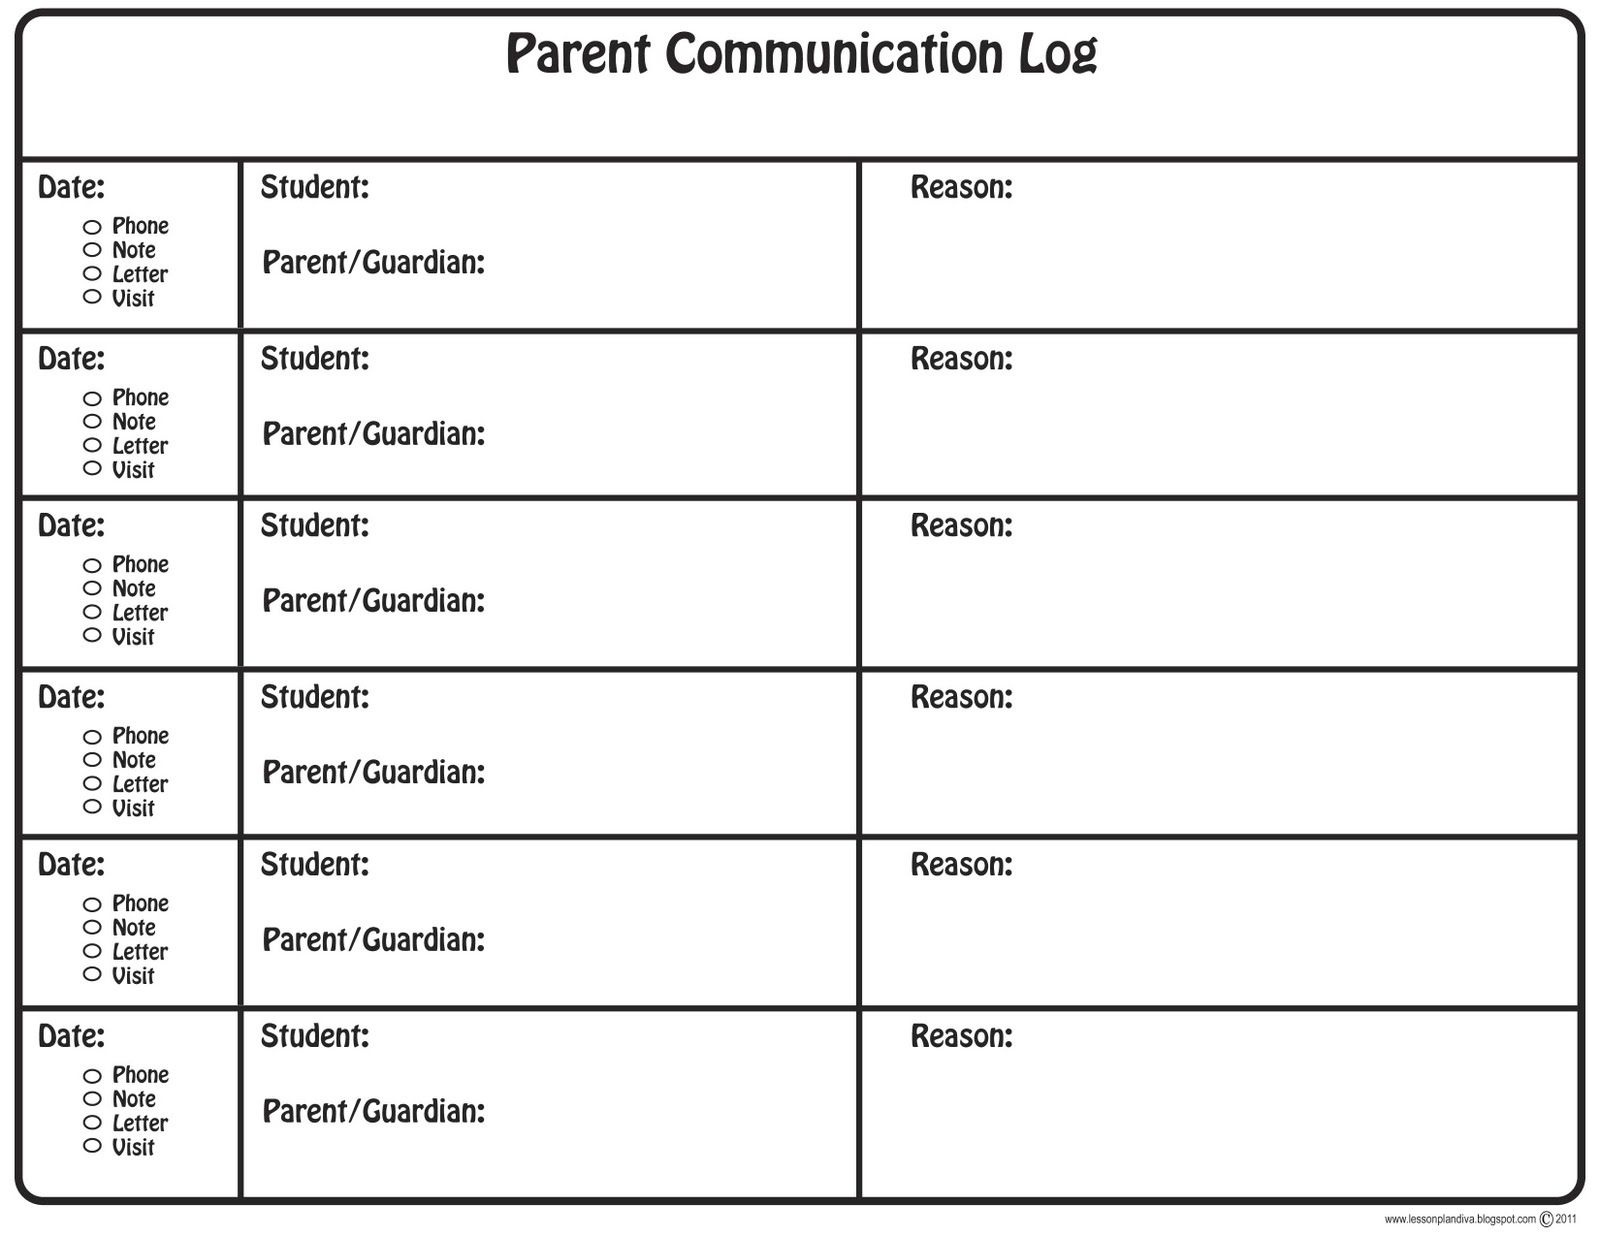 Parent Contact Log | Trafficfunnlr - Free Printable Parent Communication Log For Teachers